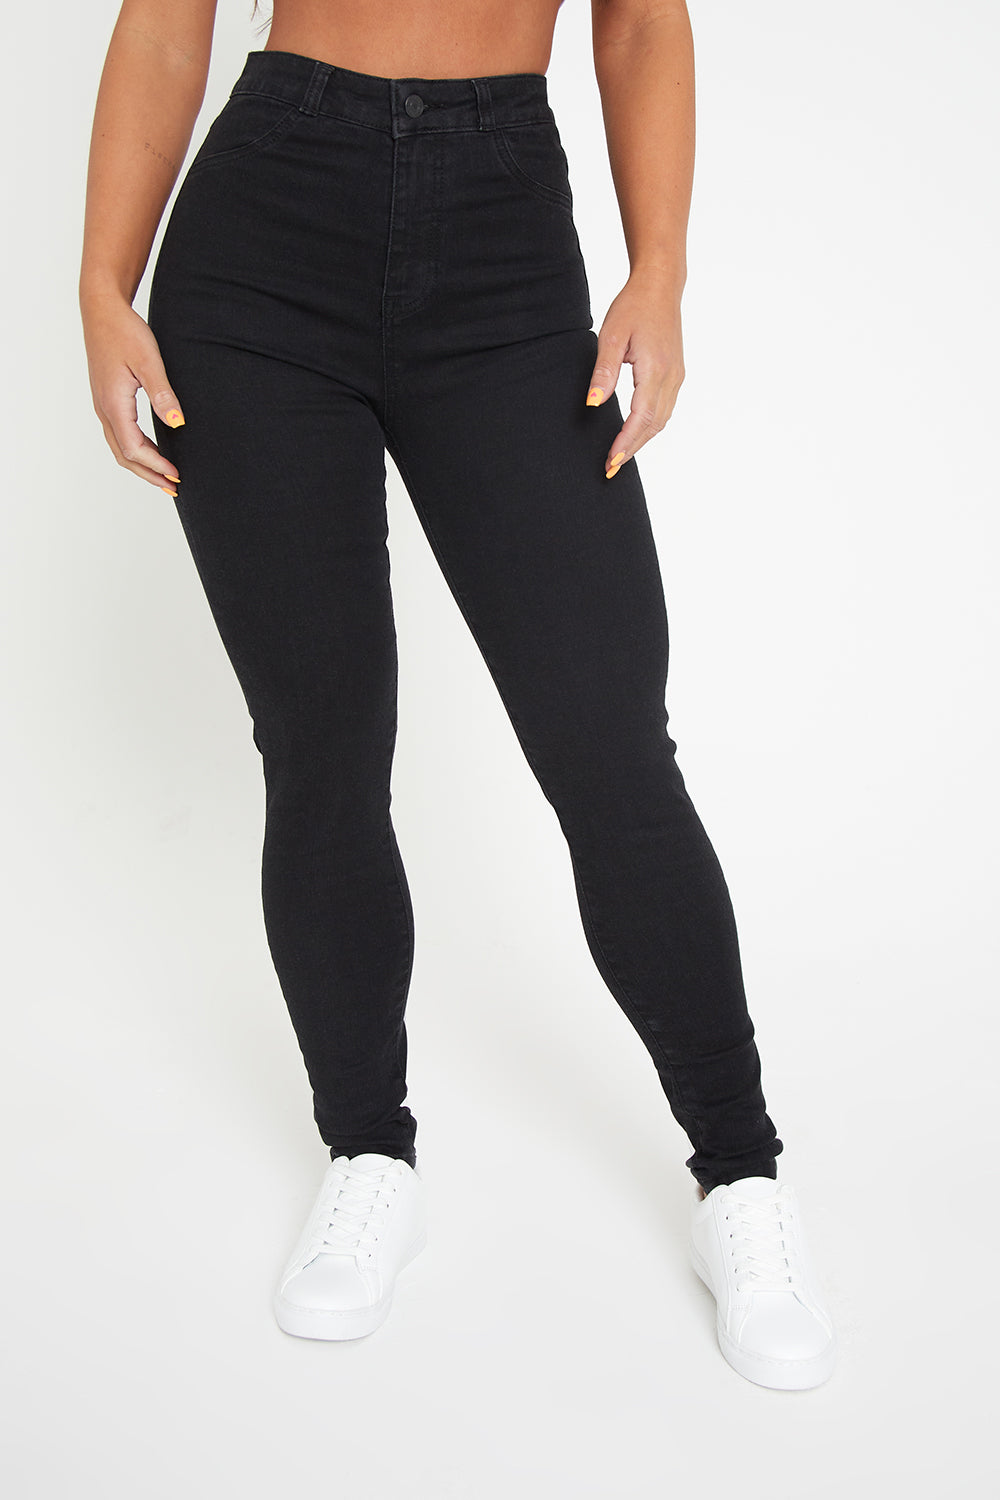 Black Butt Lifting Pants - Women's High Waisted Stretchy Skinny Pants –  Moda Xpress